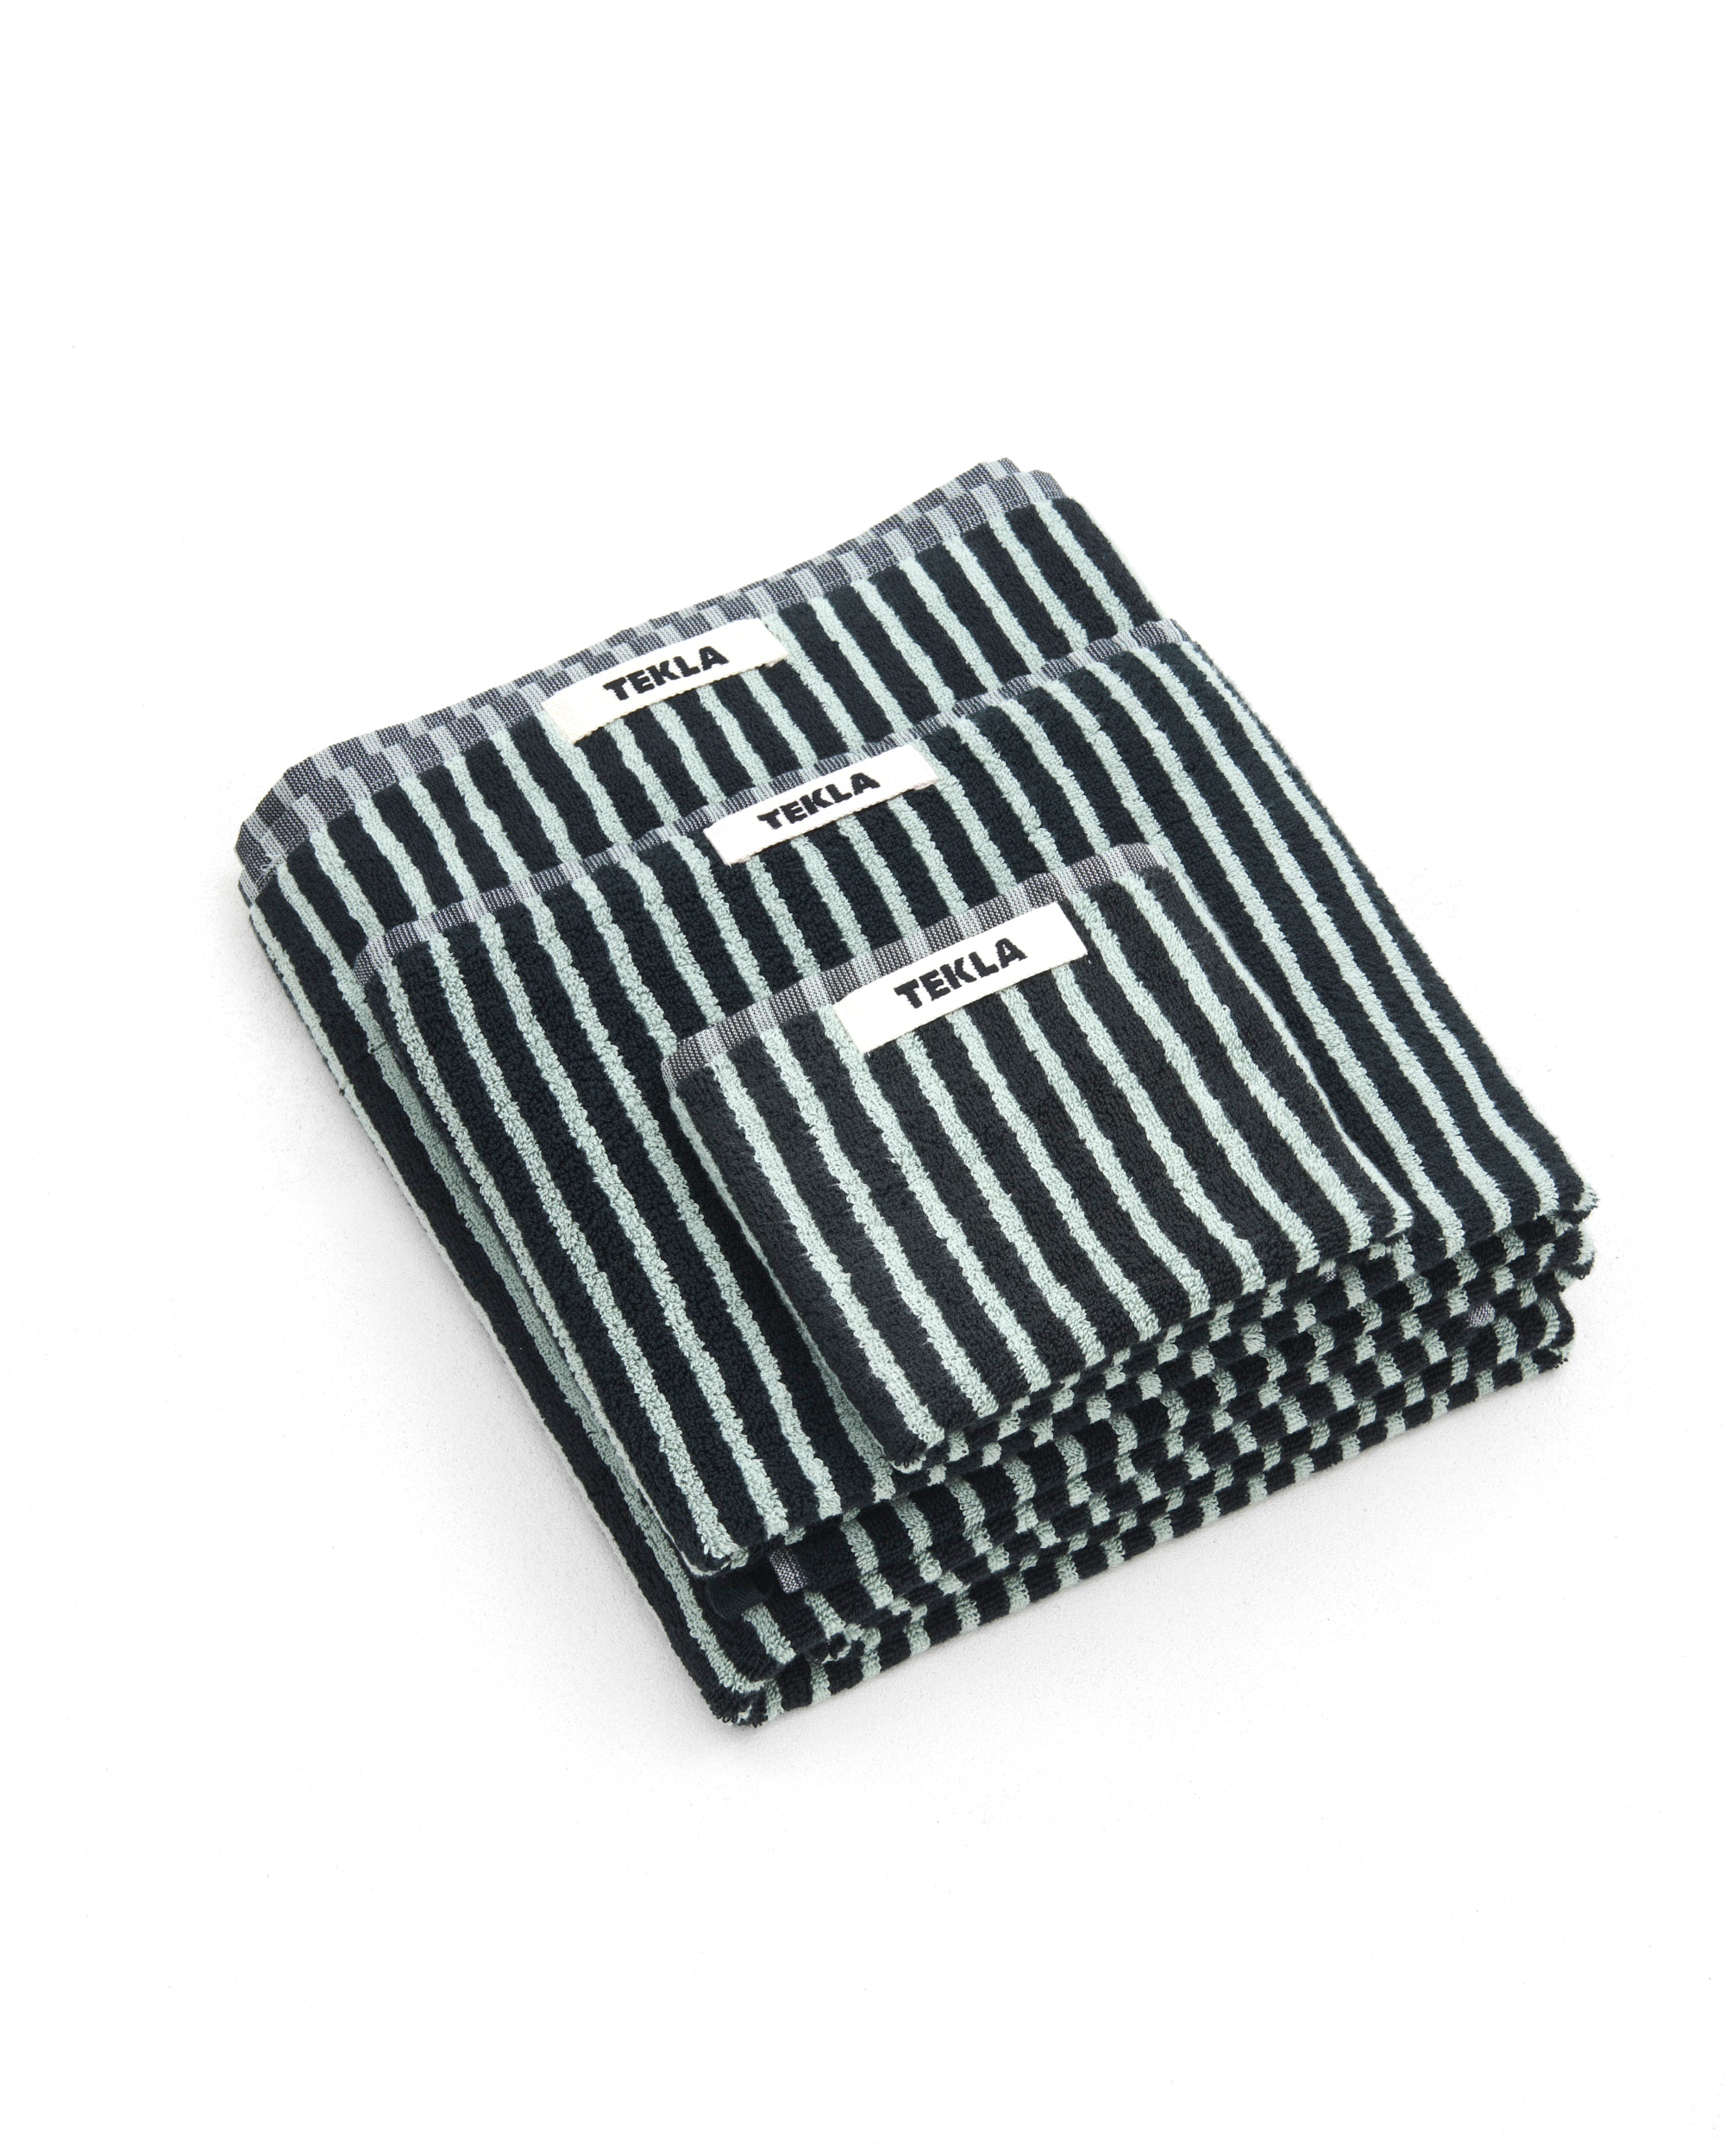 Bathmat (Striped) - Black / Mint